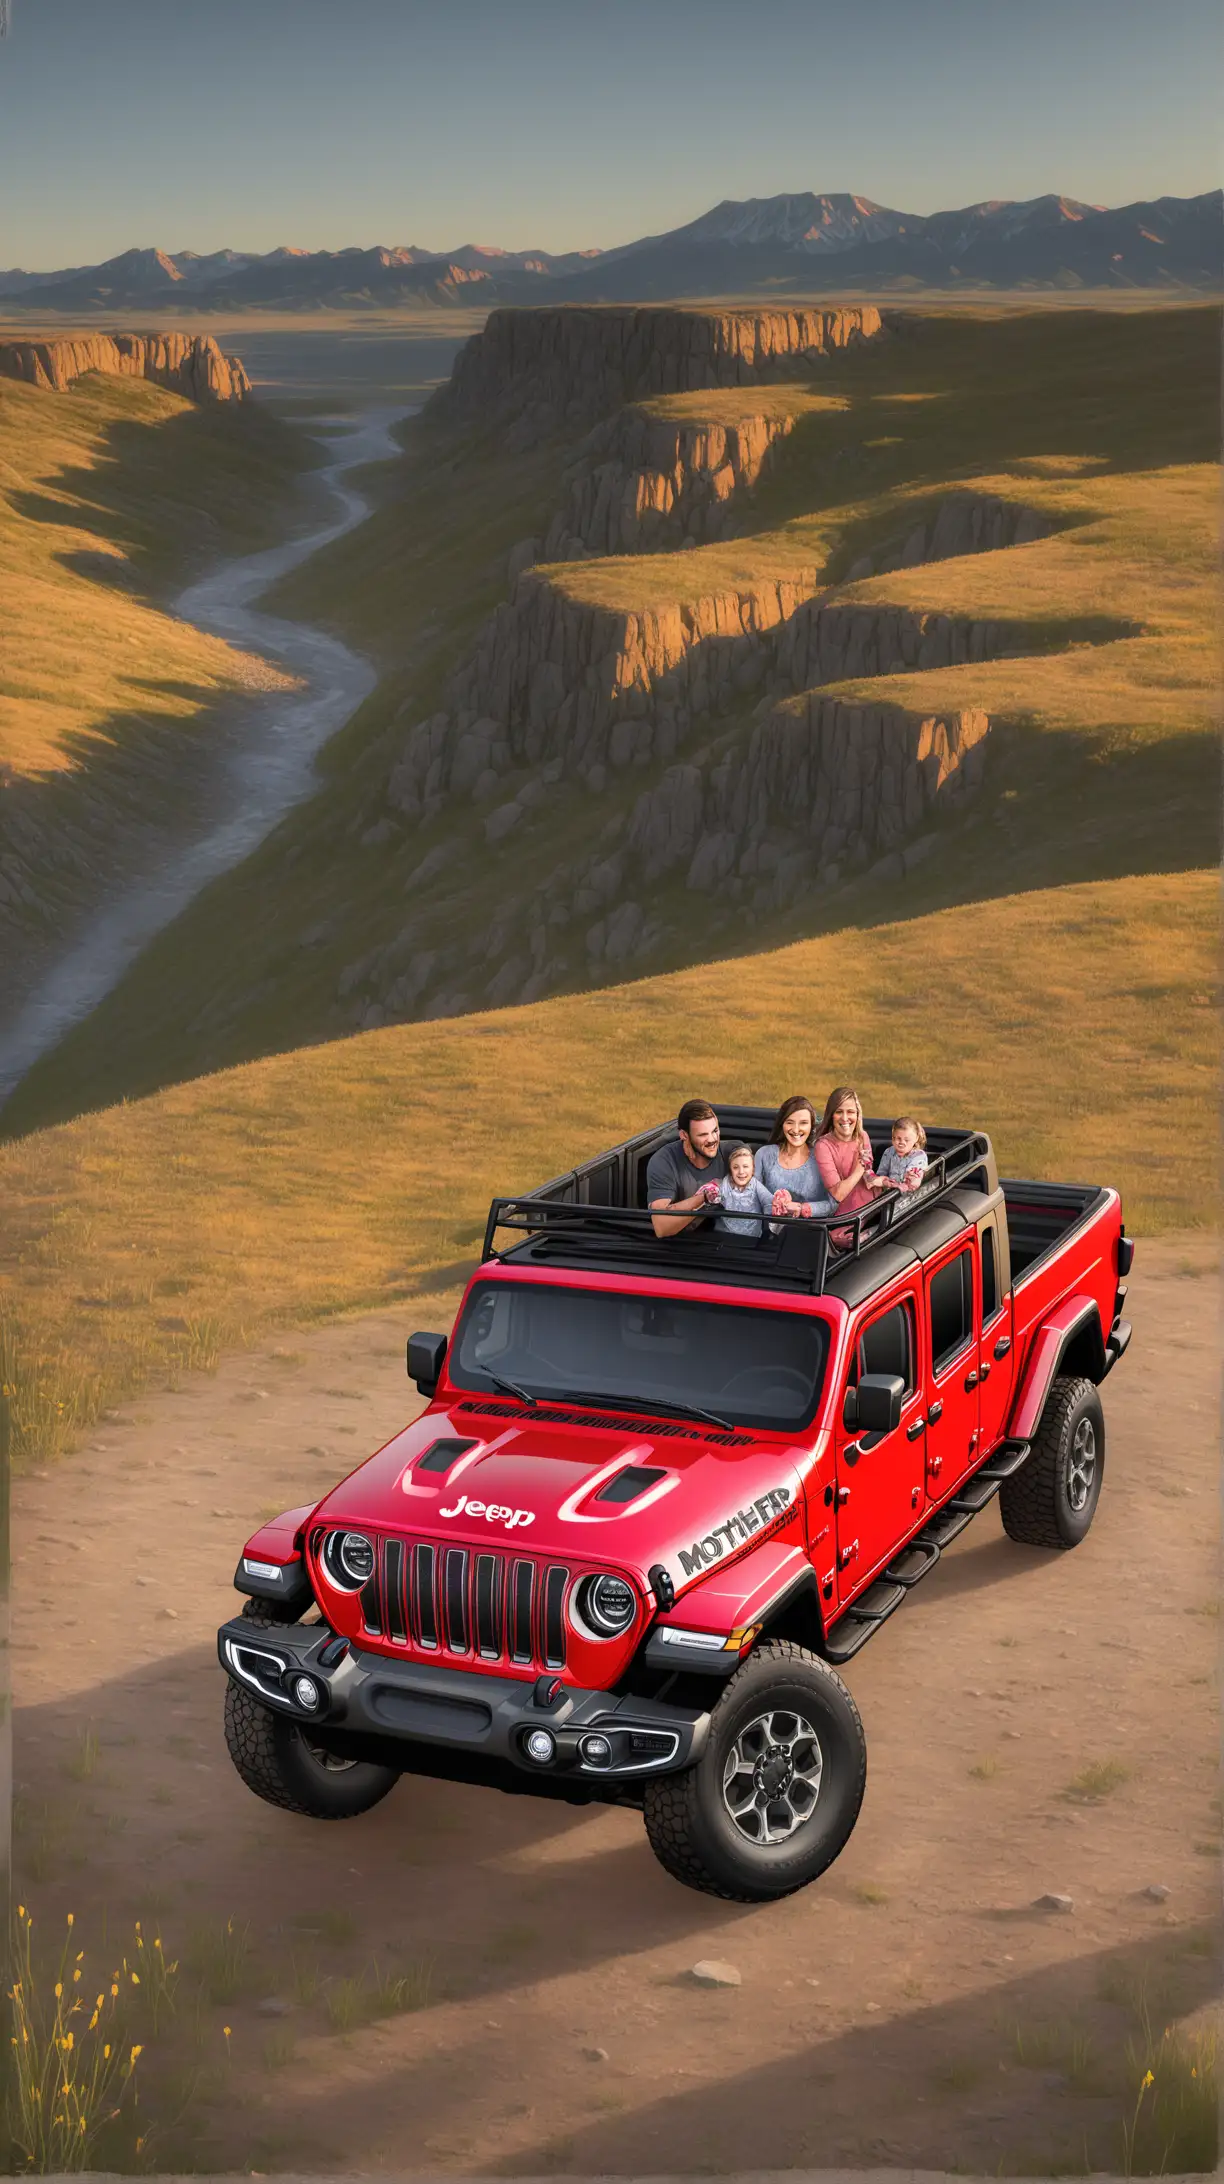 Celebrating Mothers Day with a Joyful Jeep Gladiator Adventure